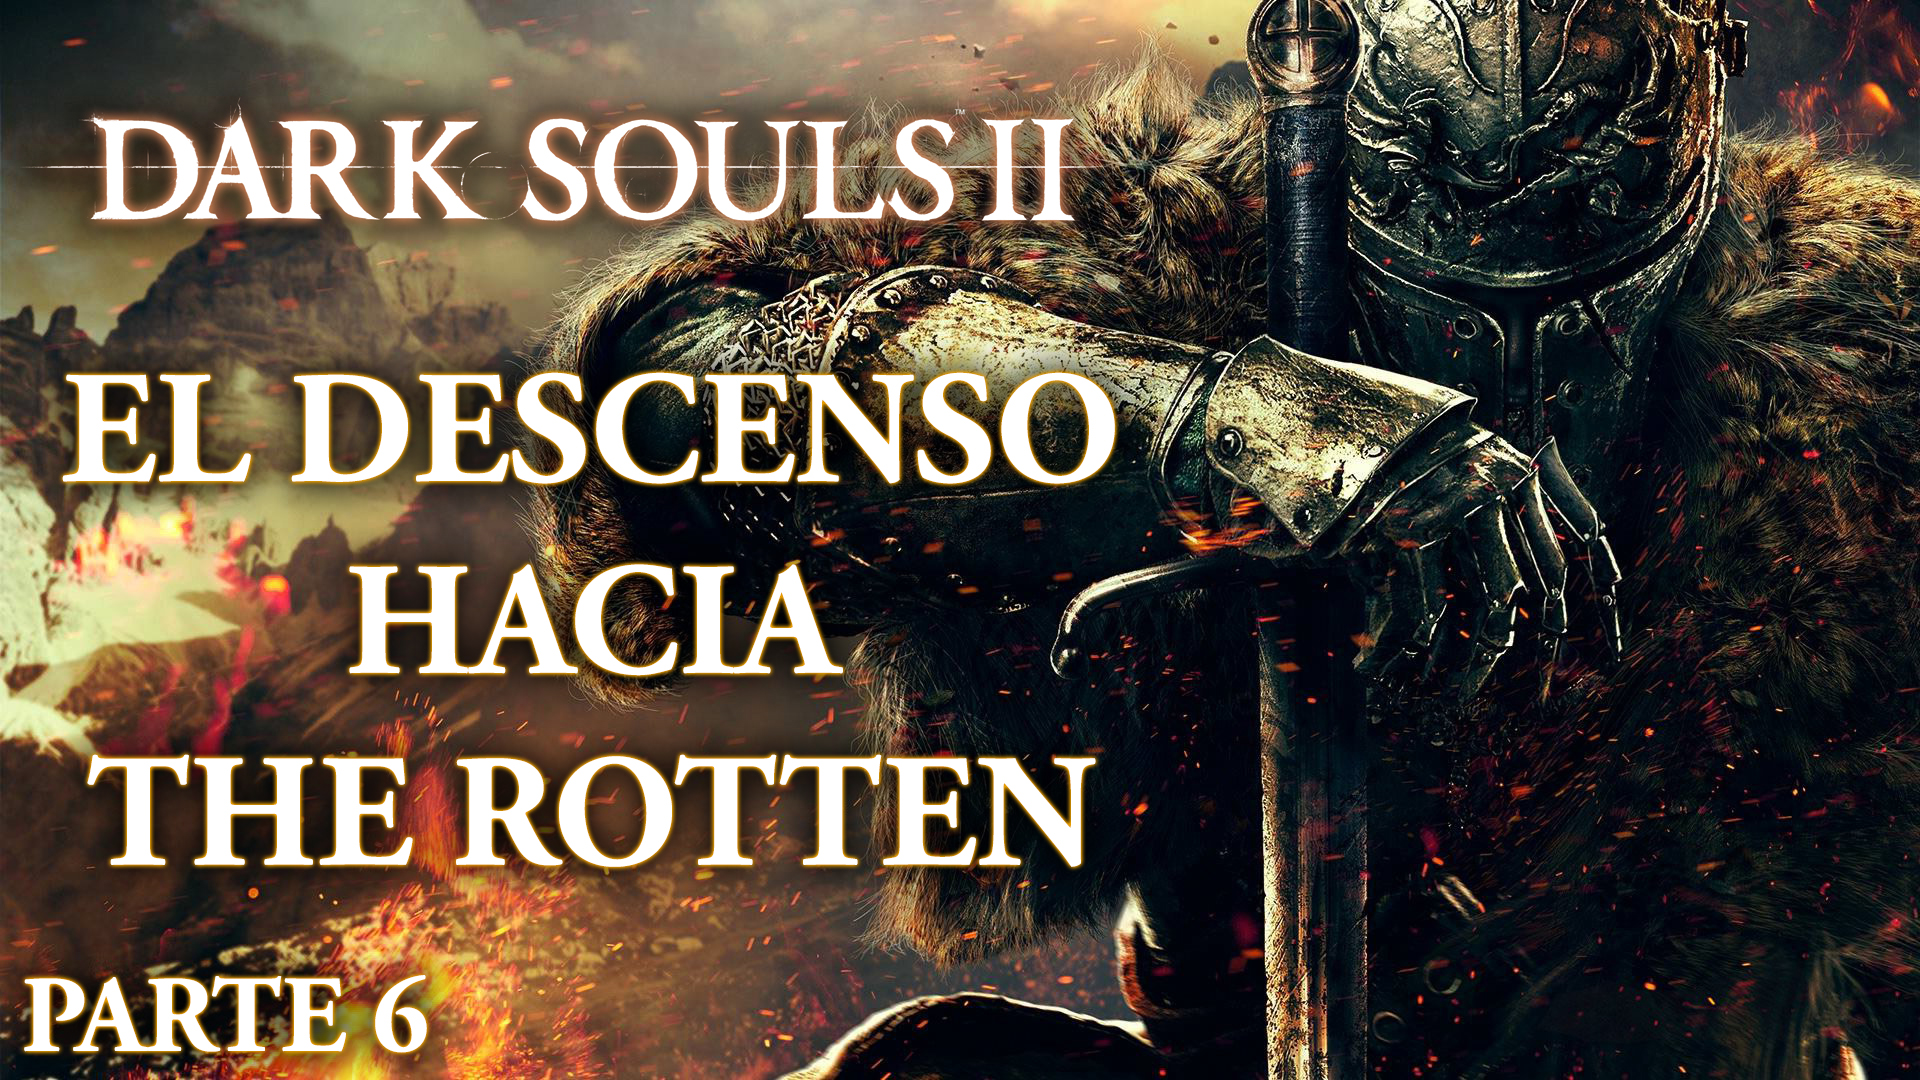 Serie Dark Souls II Parte 6: El descenso hacia The Rotten